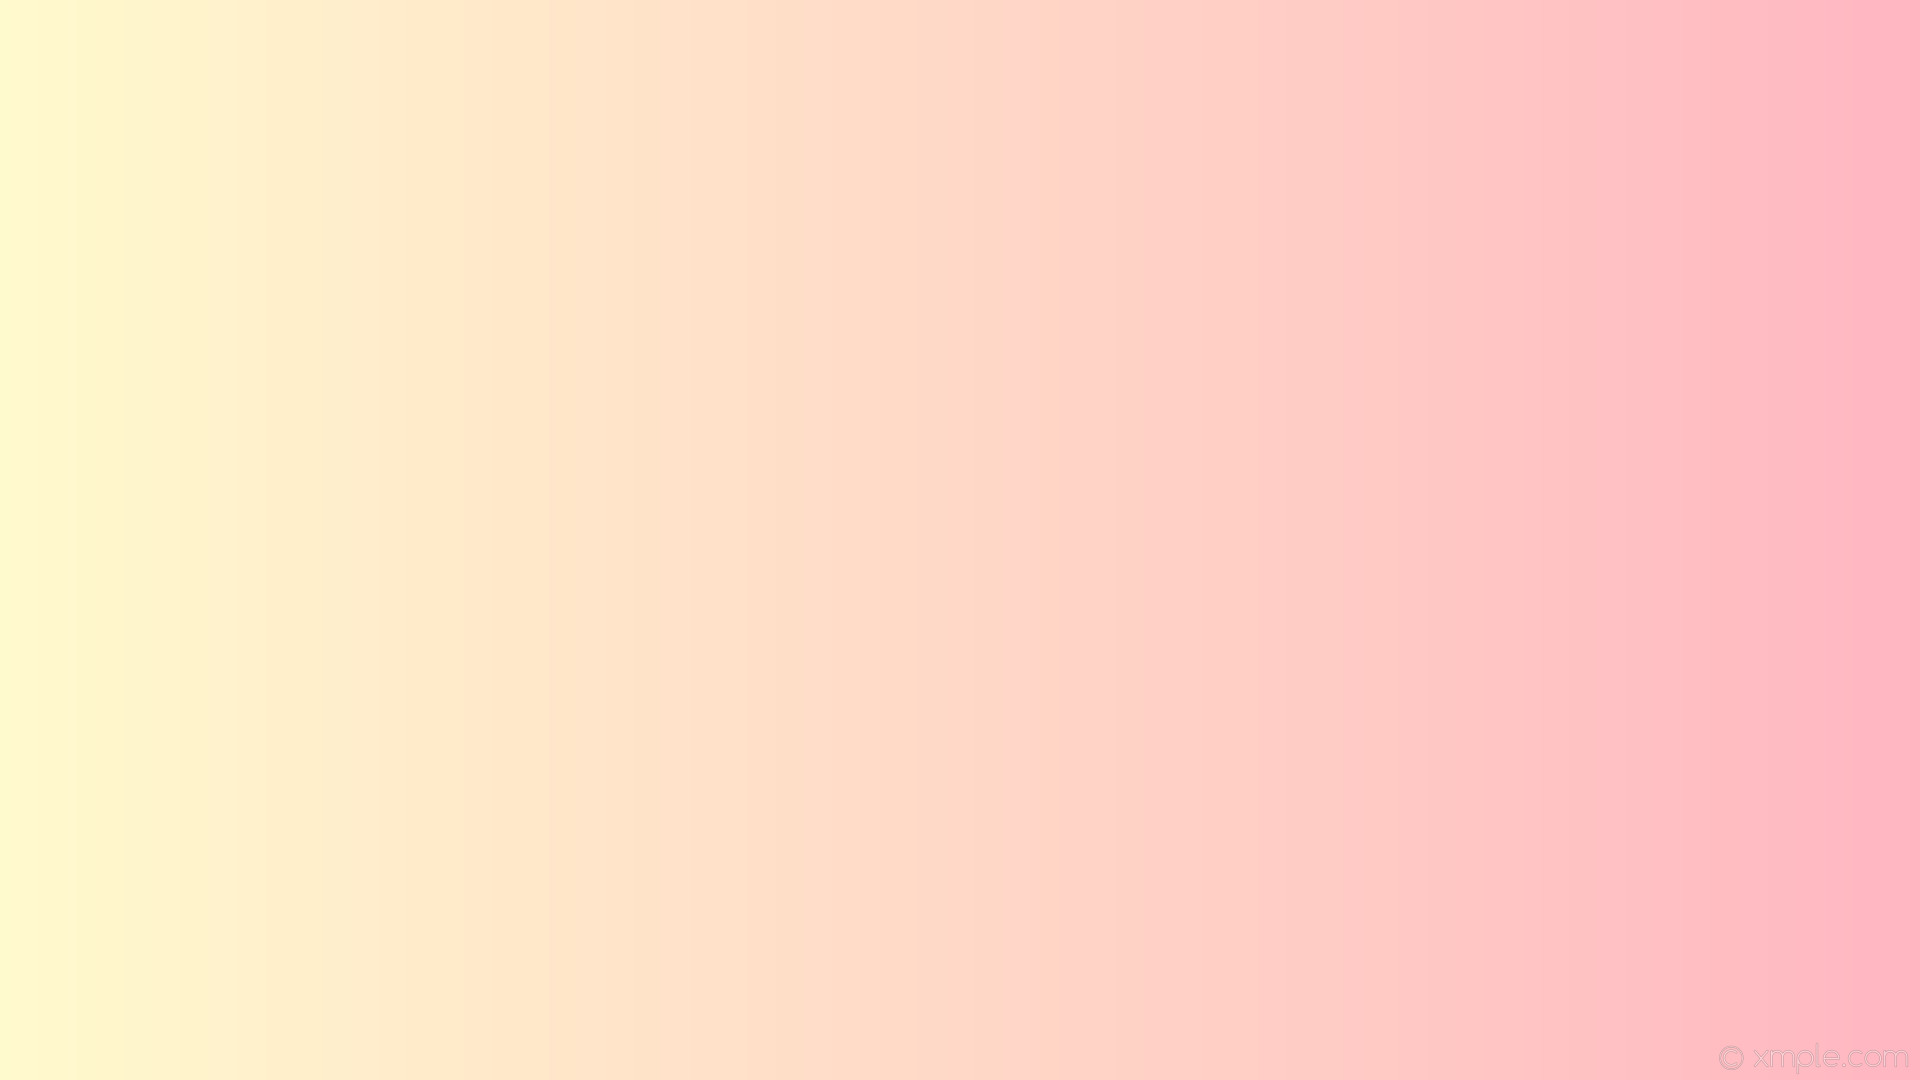 1920x1080 wallpaper yellow pink gradient linear light pink lemon chiffon #ffb6c1  #fffacd 0Â°